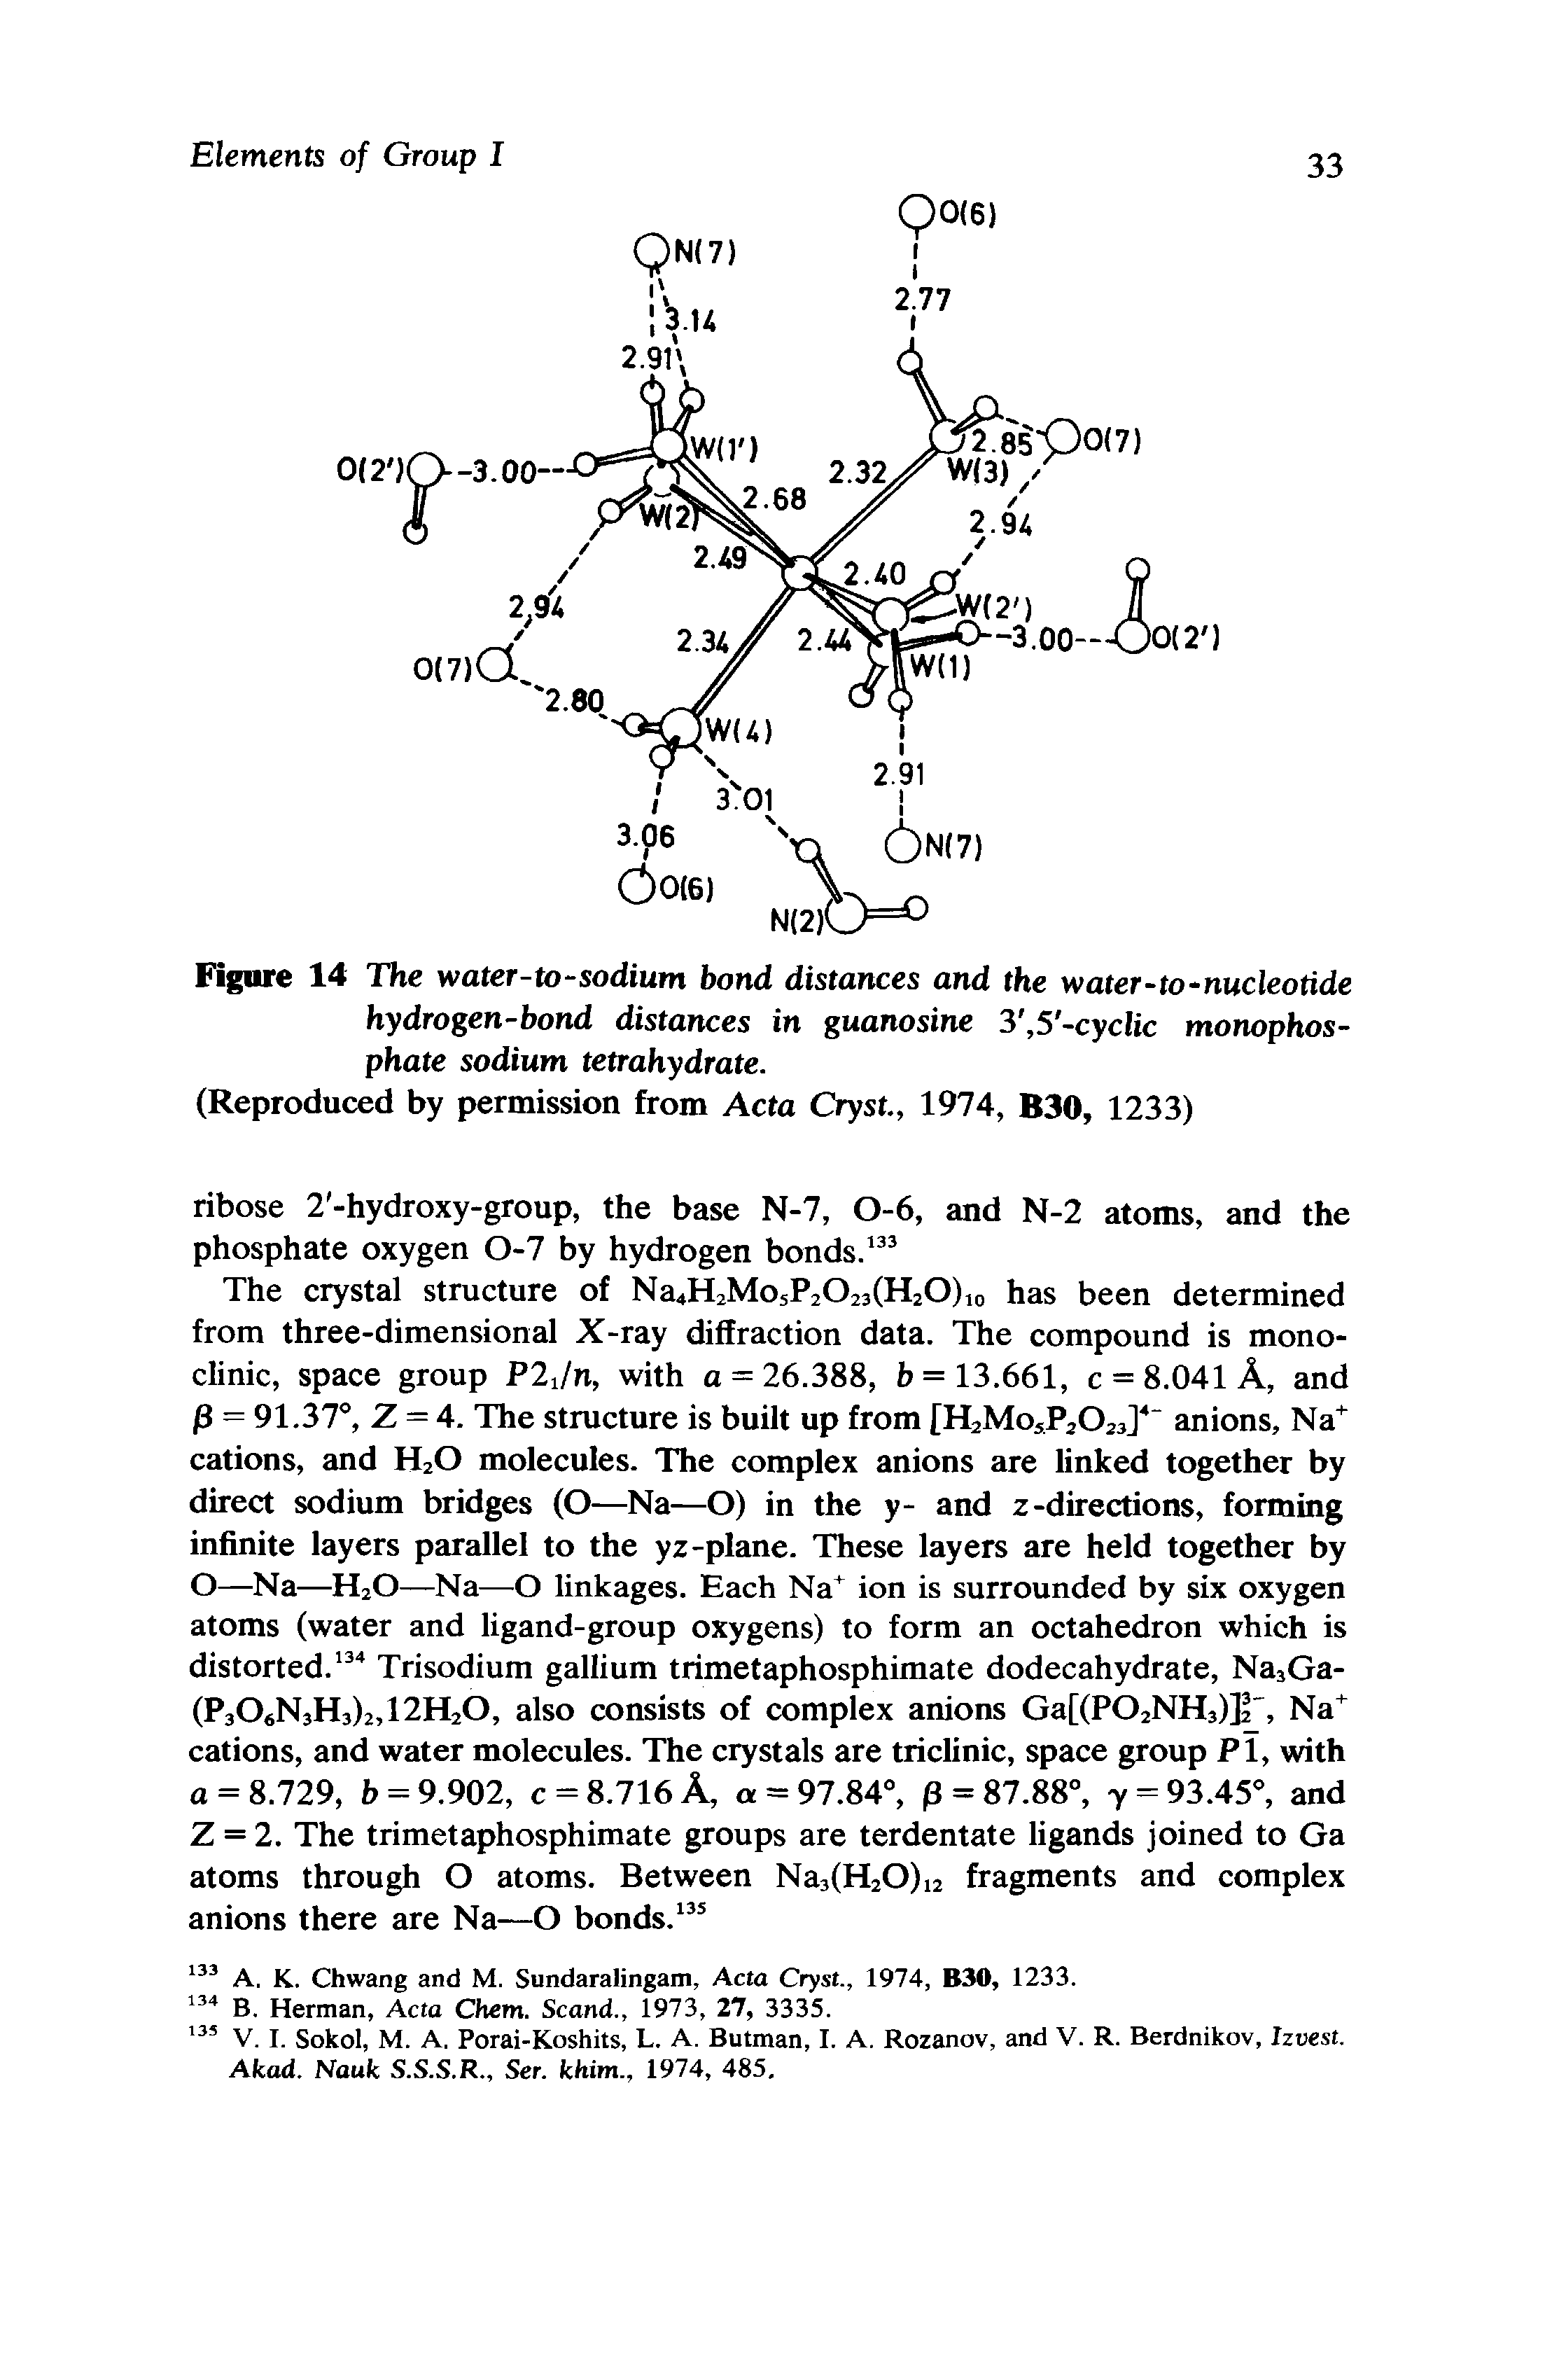 Figure 14 The water-to-sodium bond distances and the water-to-nucleotide hydrogen-bond distances in guanosine 3, 5 -cyclic monophosphate sodium tetrahydrate.